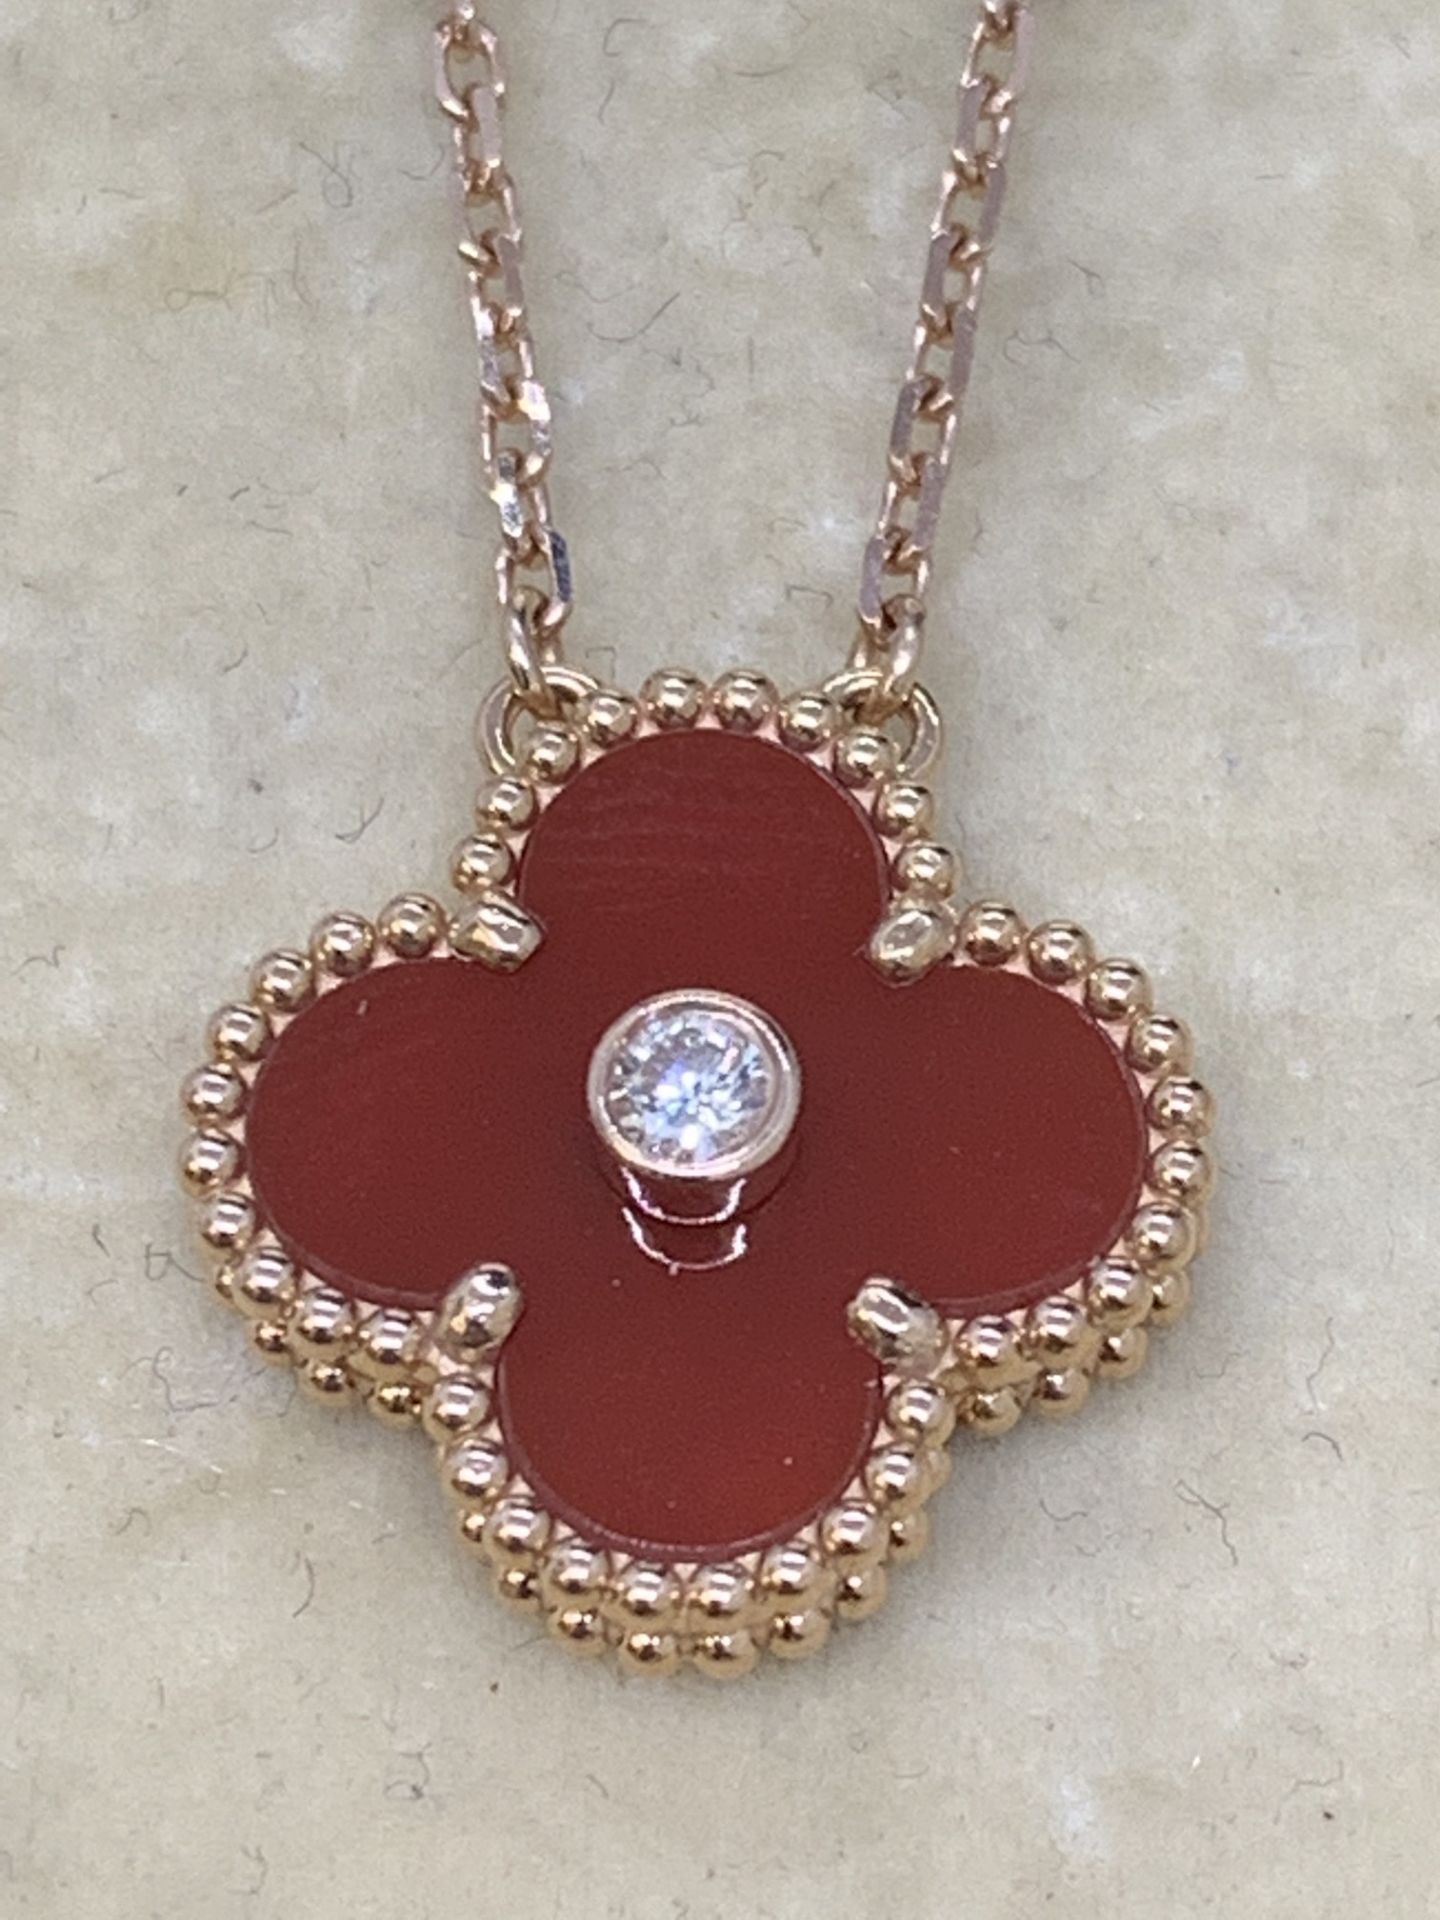 18 carat rose gold Diamond set pendant and chain marked VCA 750